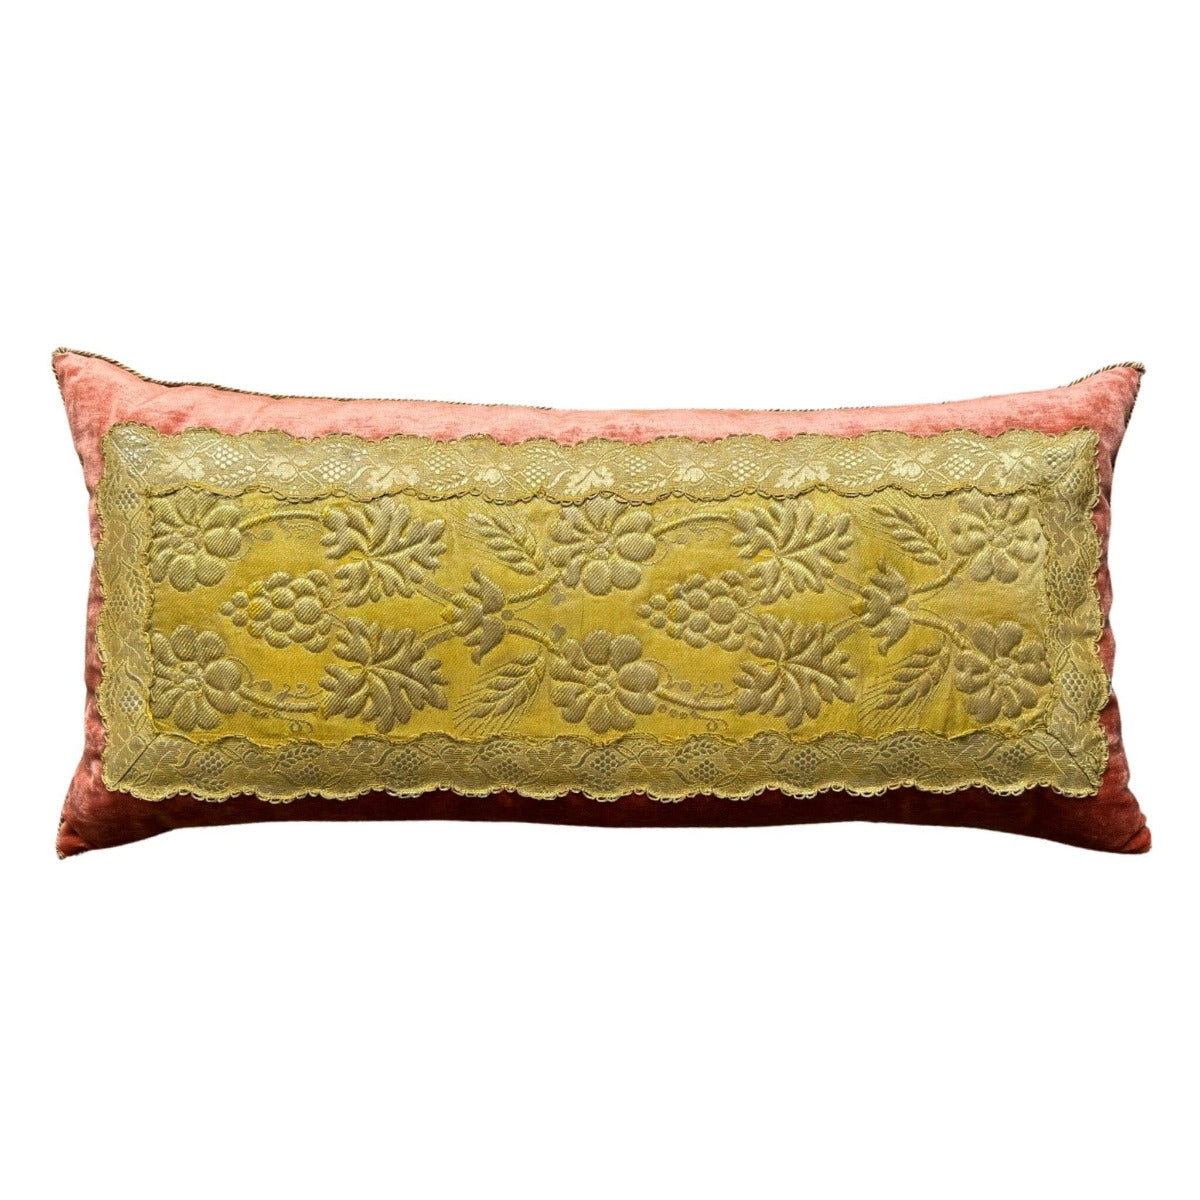 19th C. European Cloth of Gold with Raised Gold Metallic Embroidery (#M111523 | 15x31") New Pillows B. Viz Design 